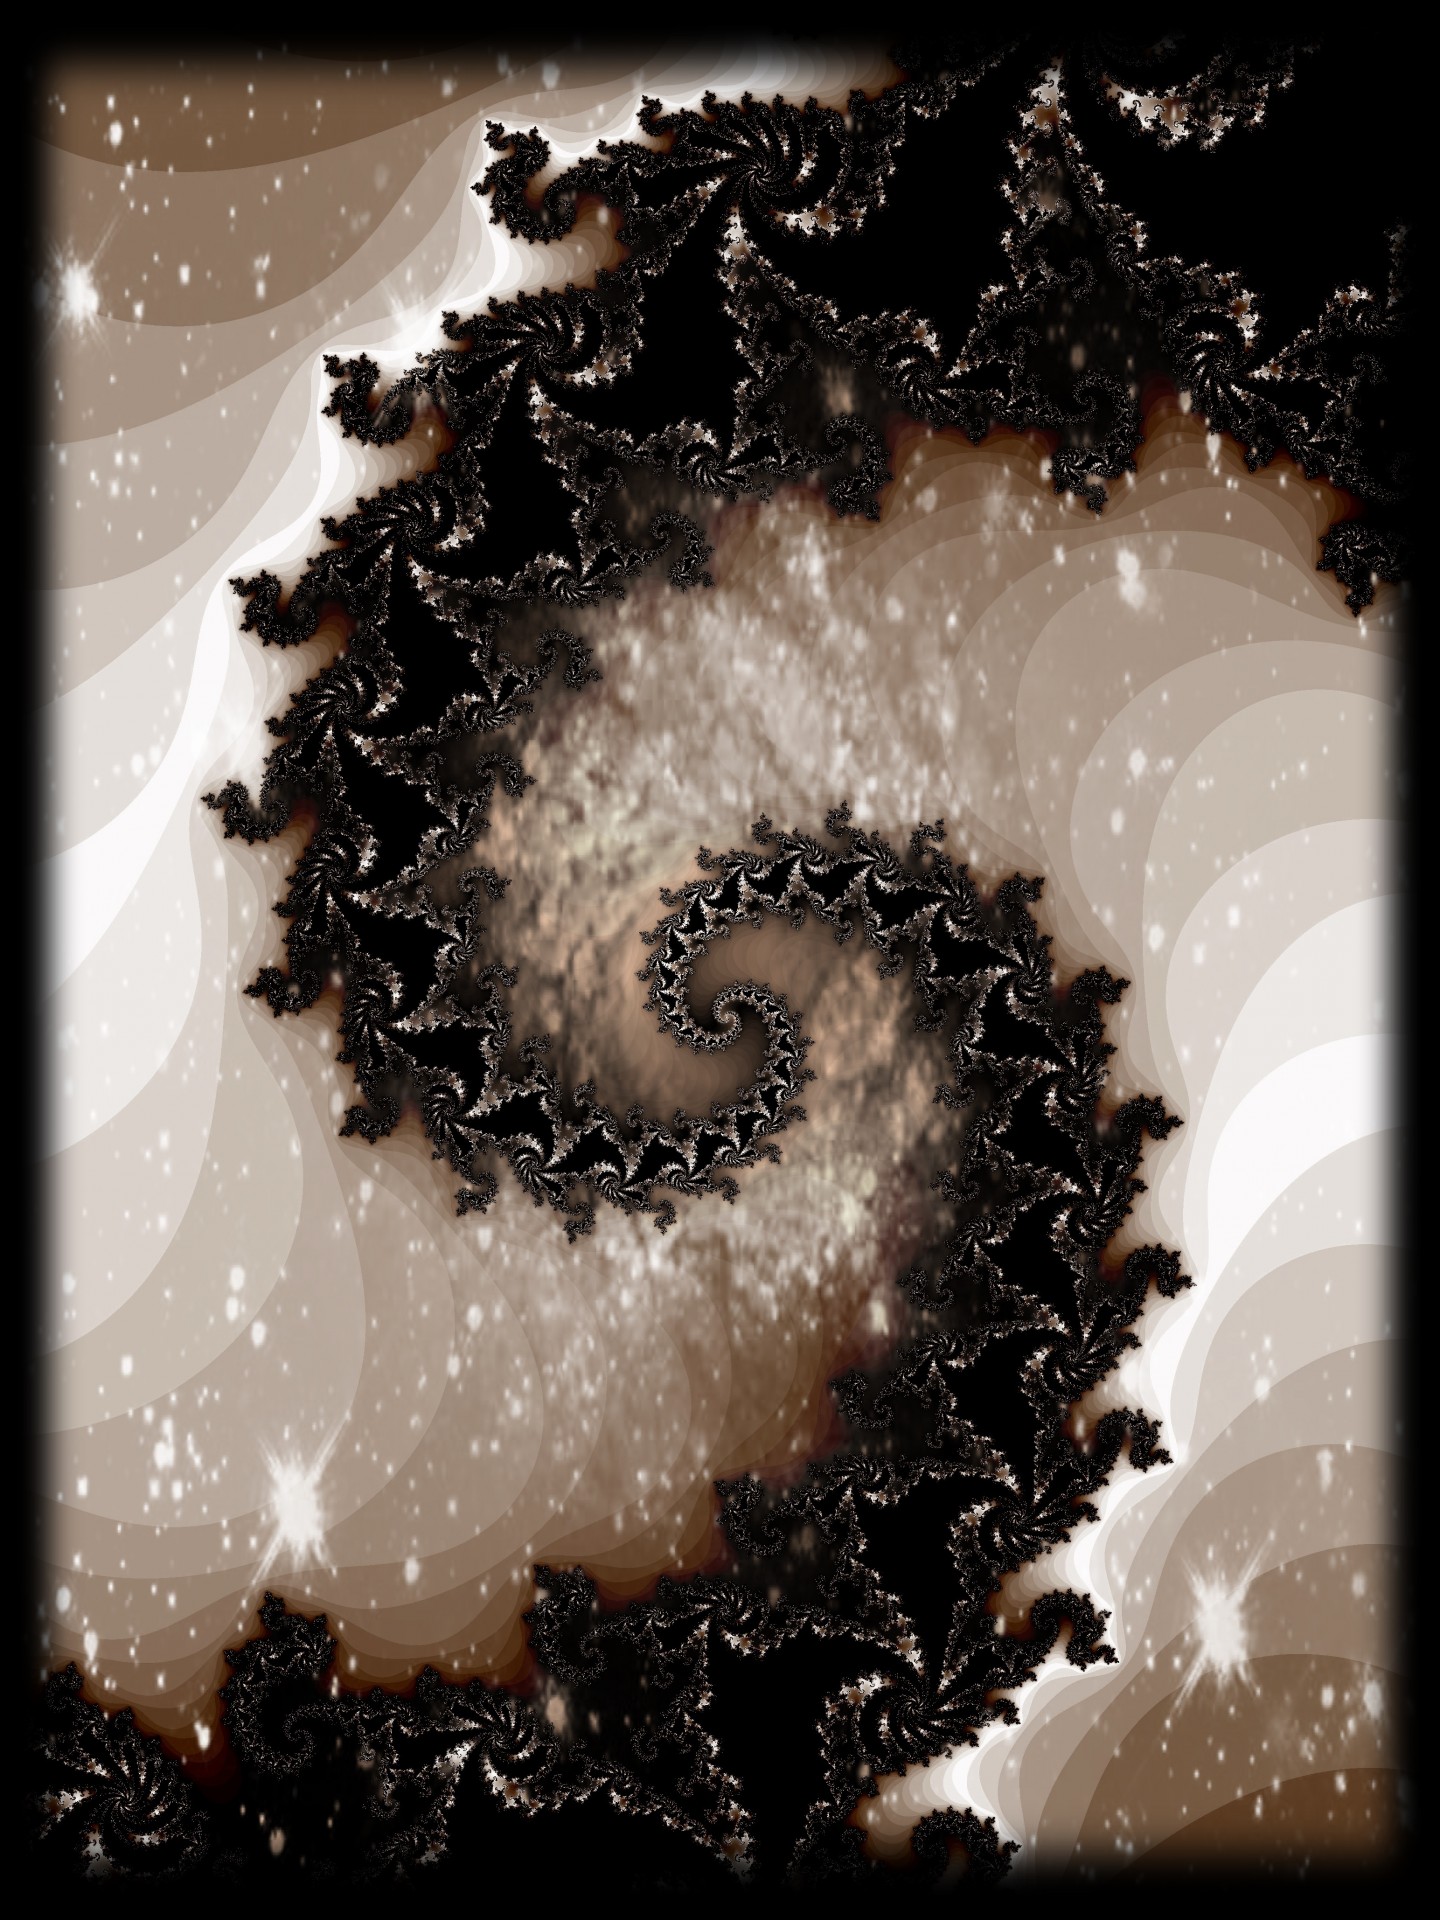 astronira fractal galaxy free photo